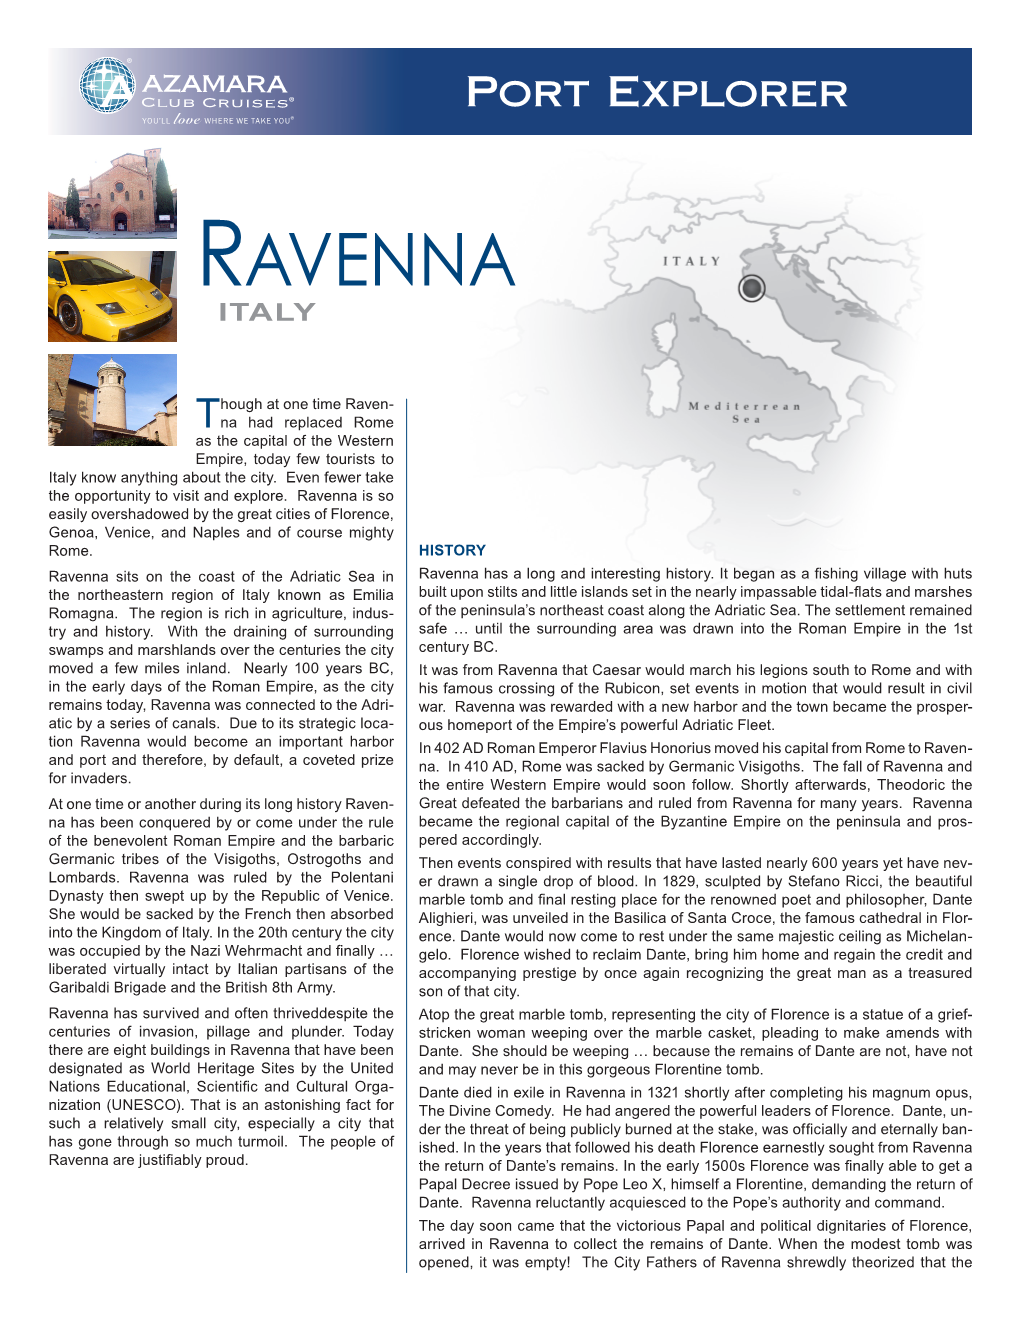 Ravenna Italy